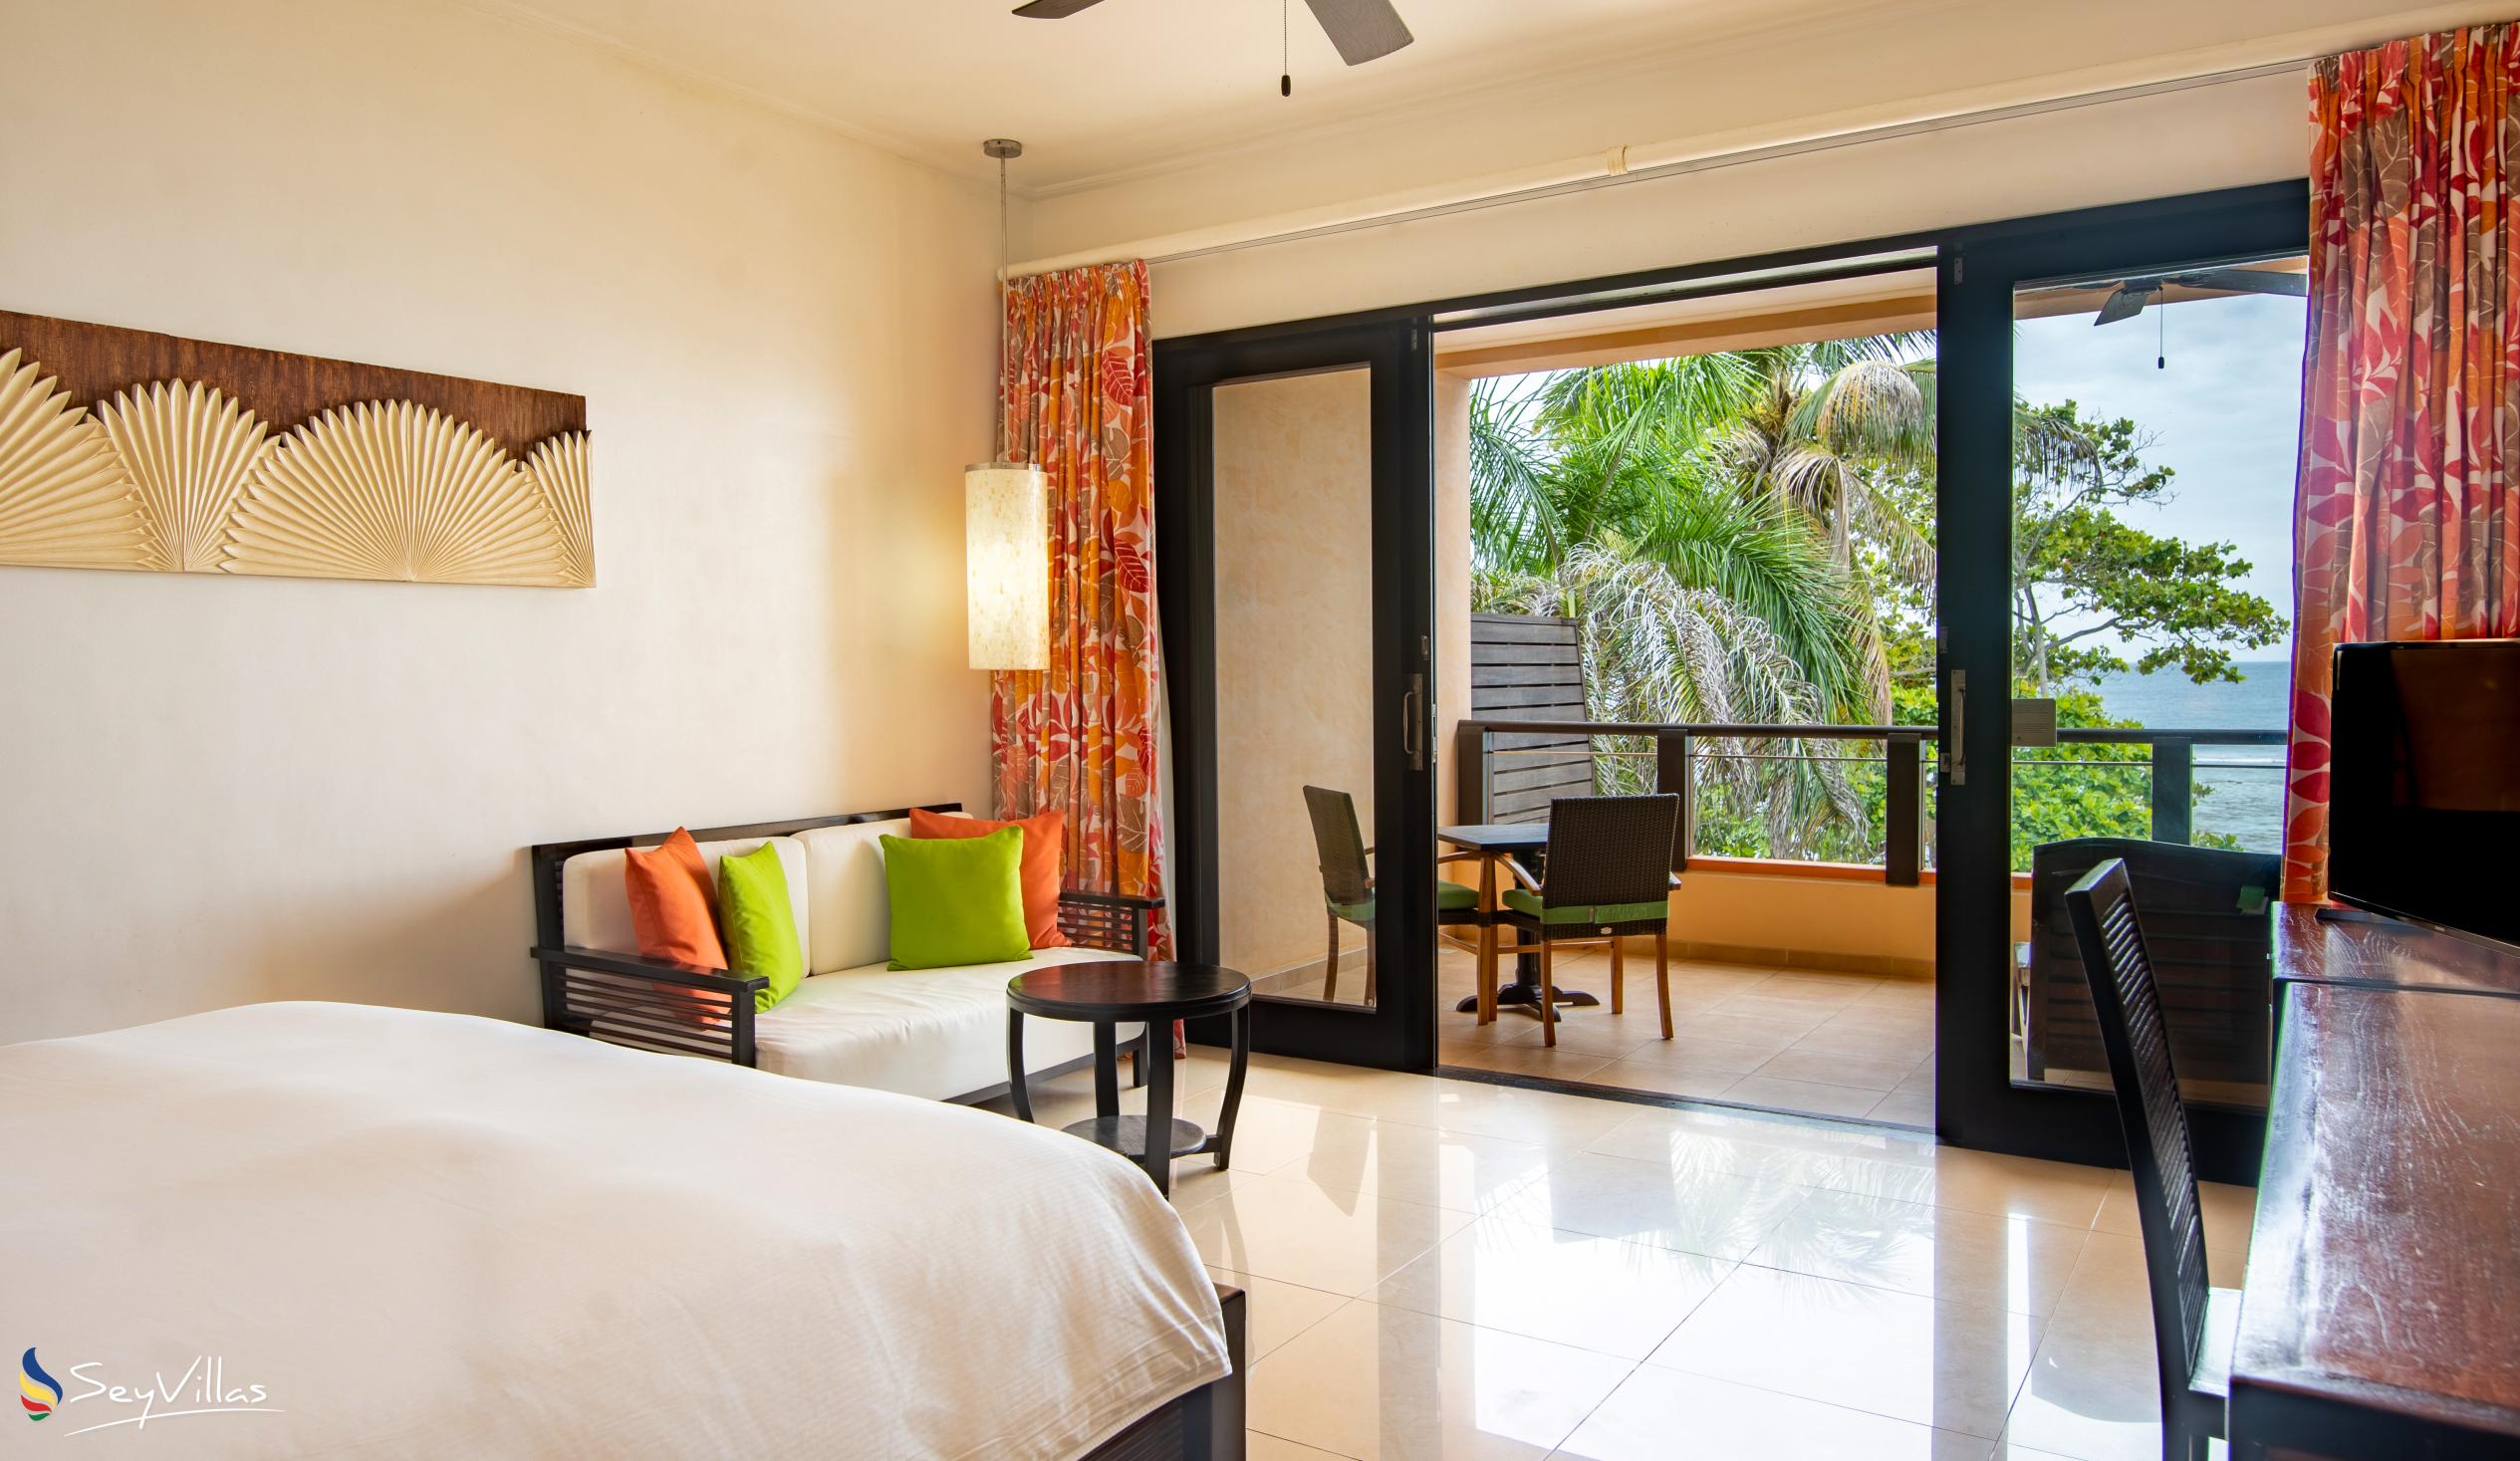 Foto 27: Double Tree by Hilton - Allamanda Resort & Spa - King Deluxe Room with Ocean View - Mahé (Seychellen)